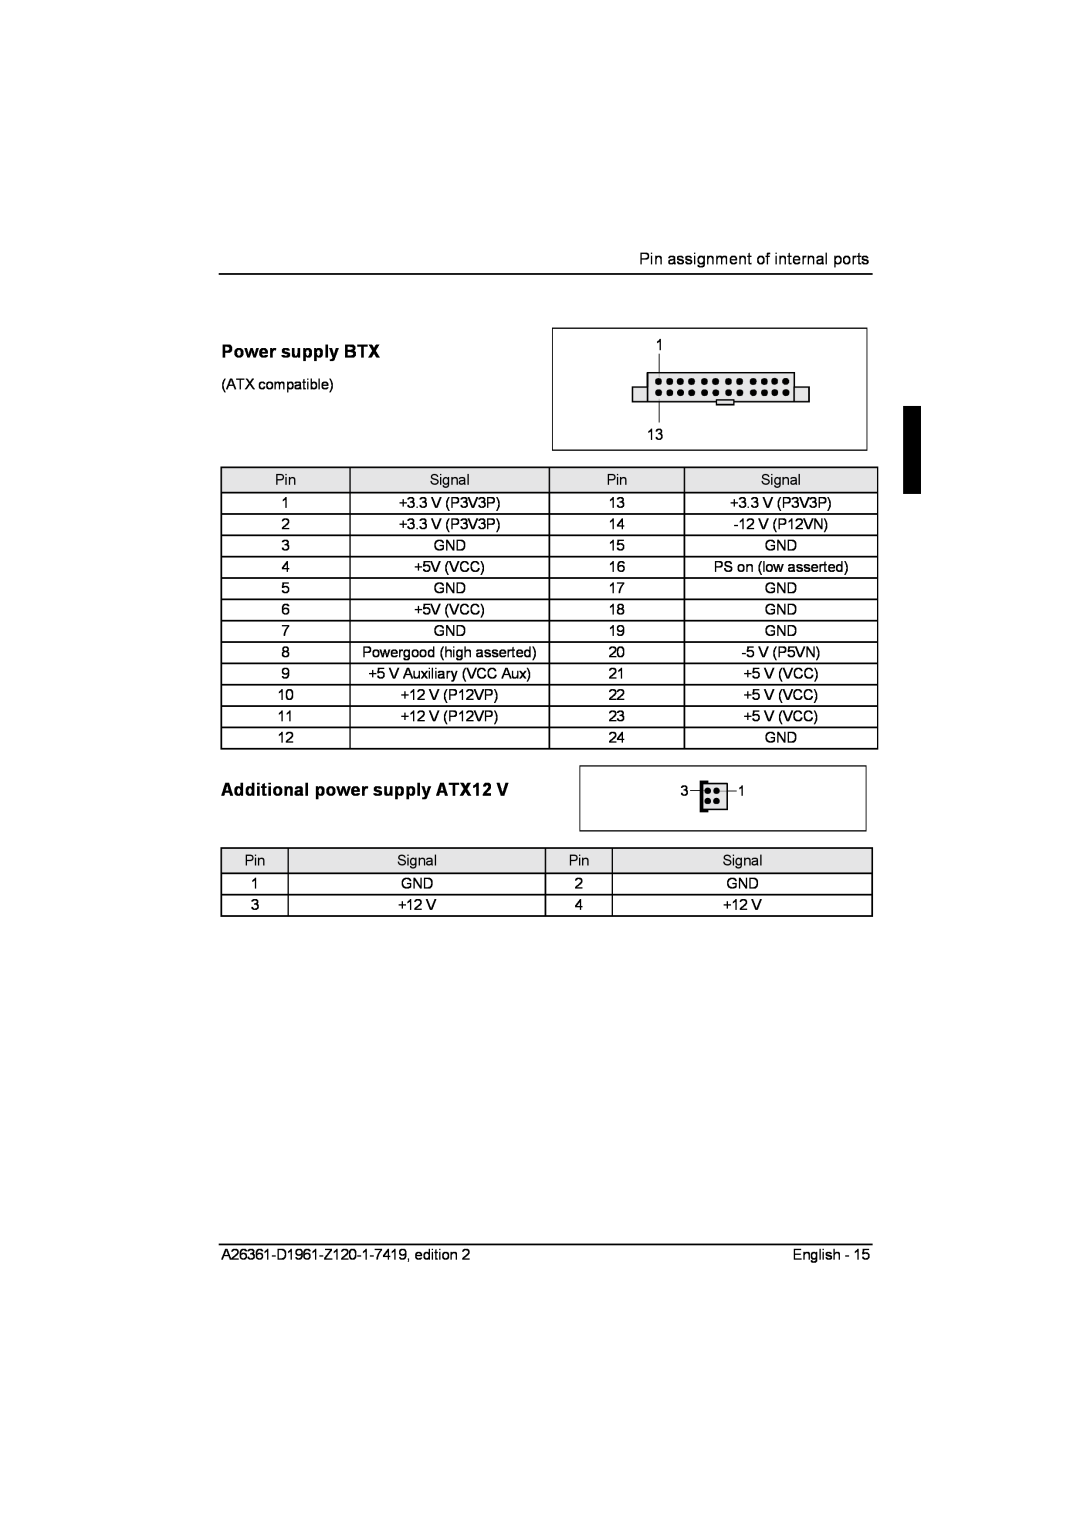 Fujitsu D1961 technical manual Power supply BTX, Additional power supply ATX12, Pin assignment of internal ports 